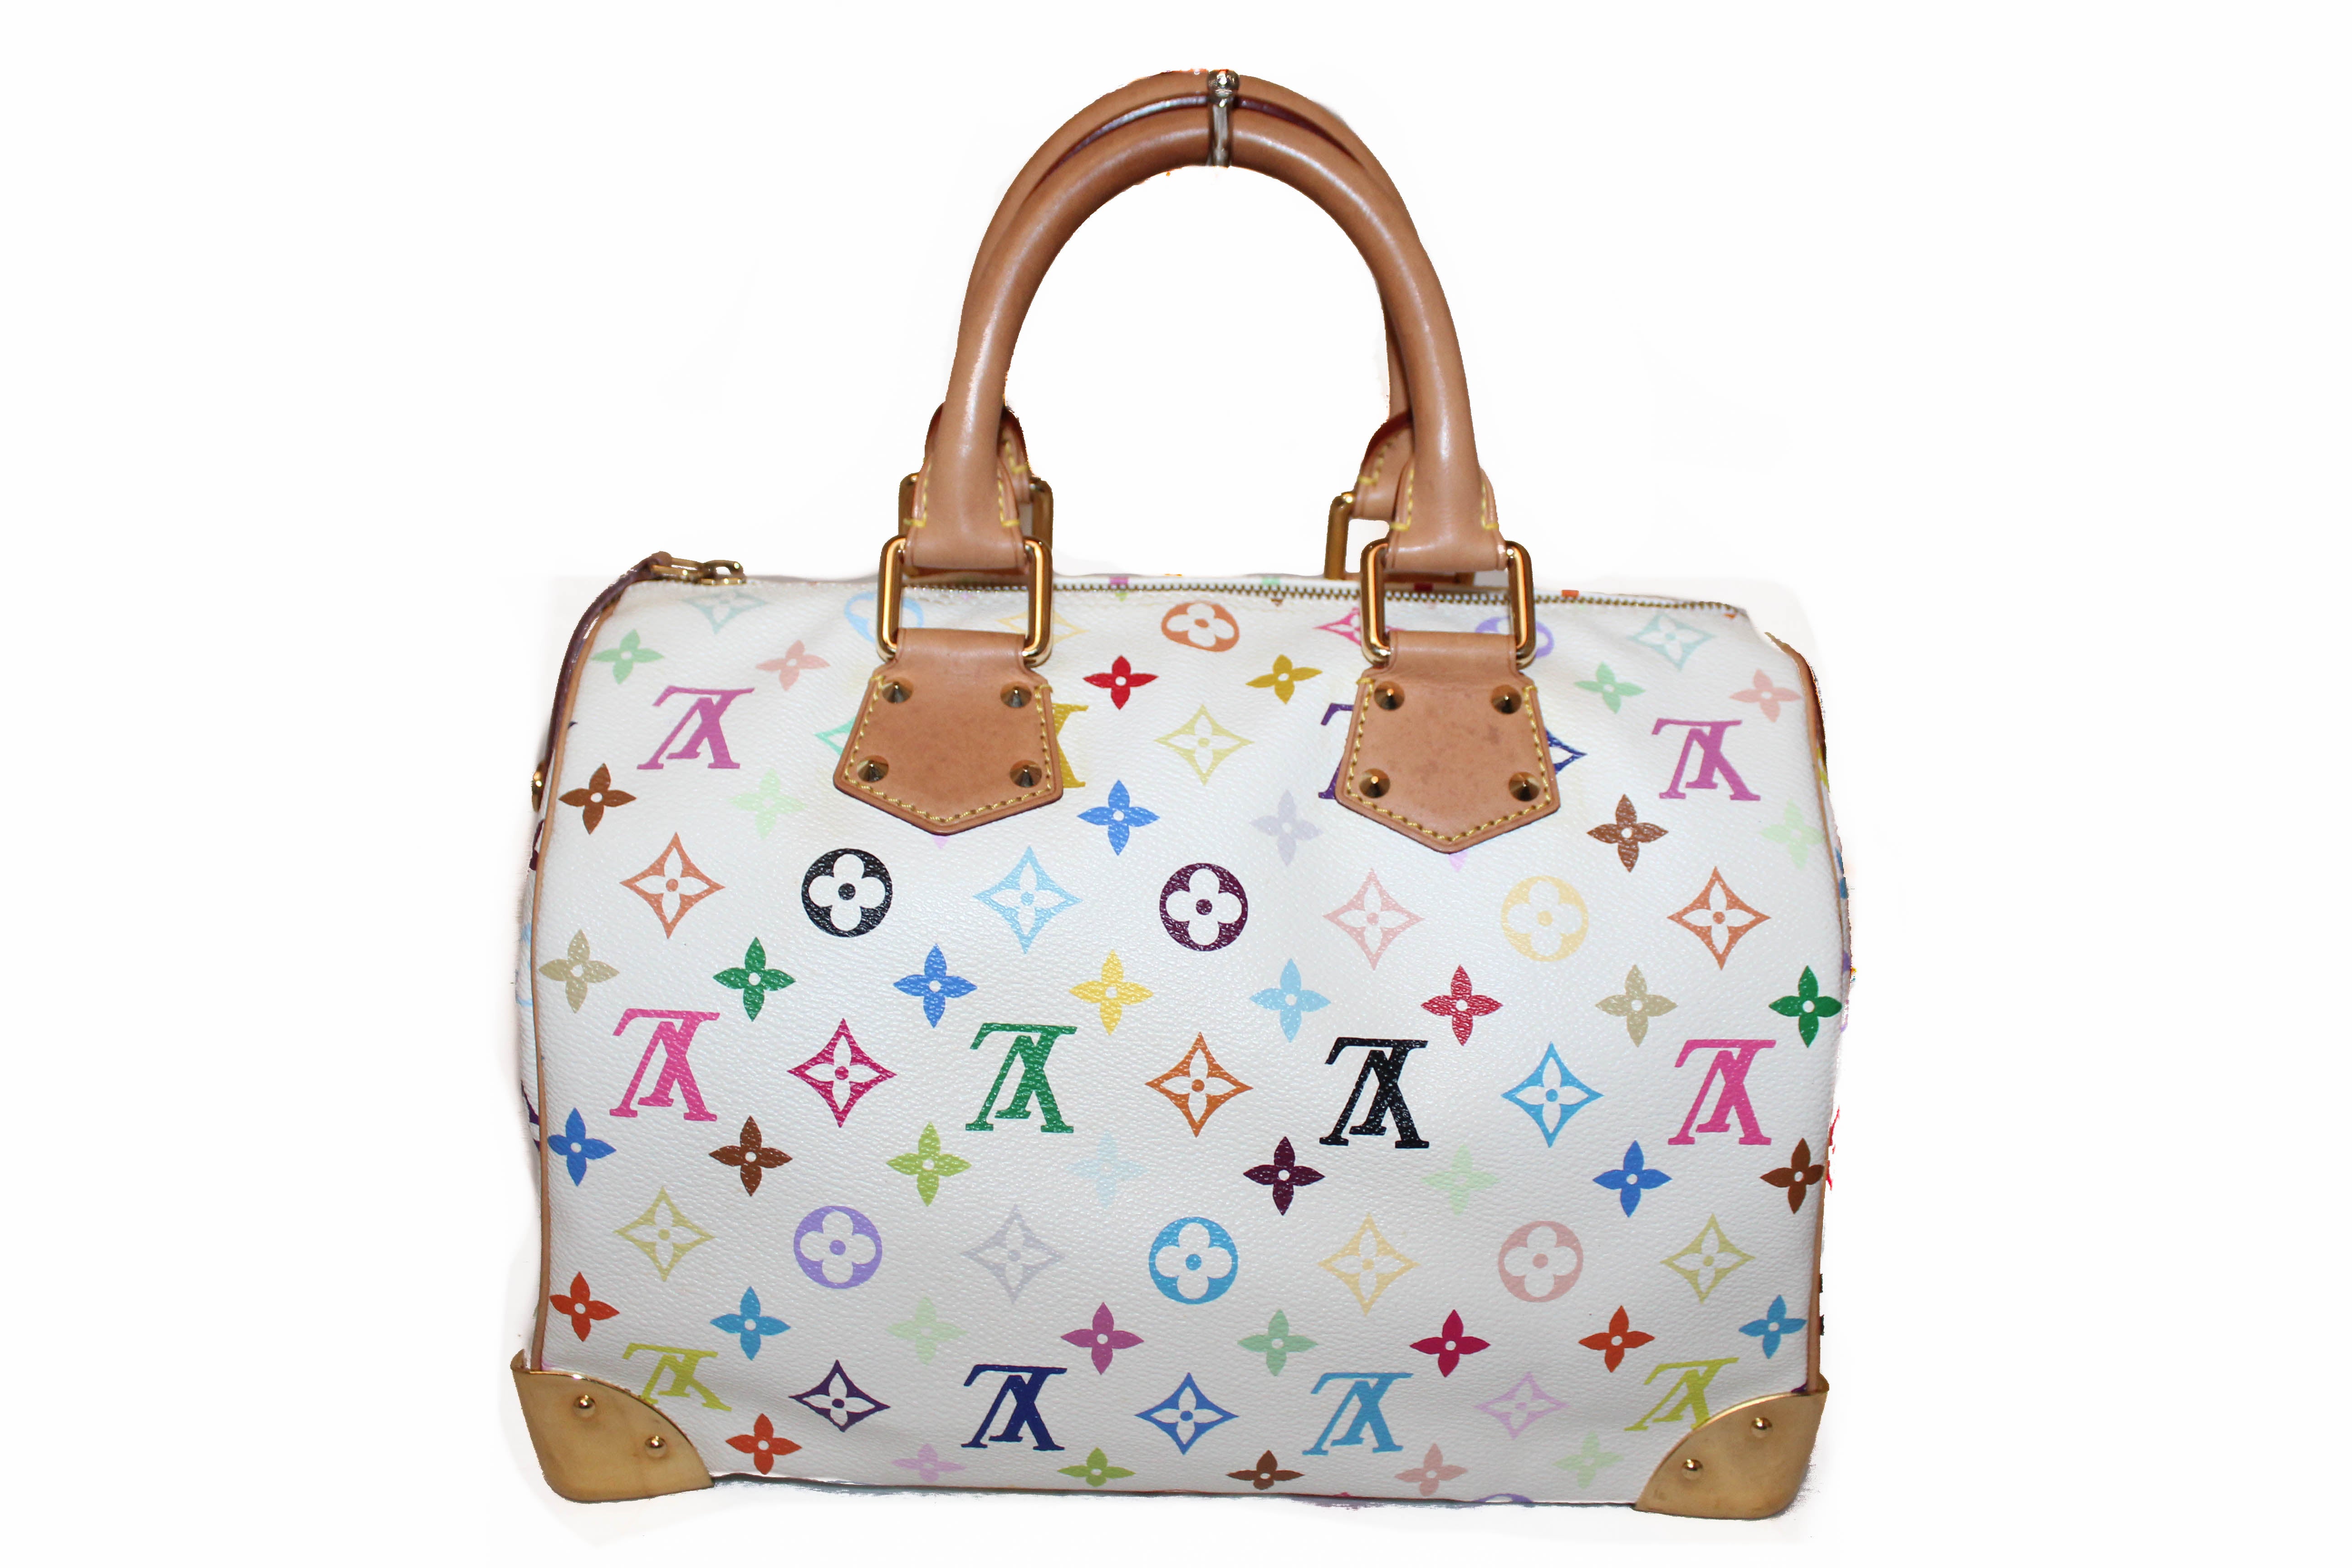 Authentic Limited Edition Louis Vuitton White Multicolore Canvas Speedy 30 Handbag